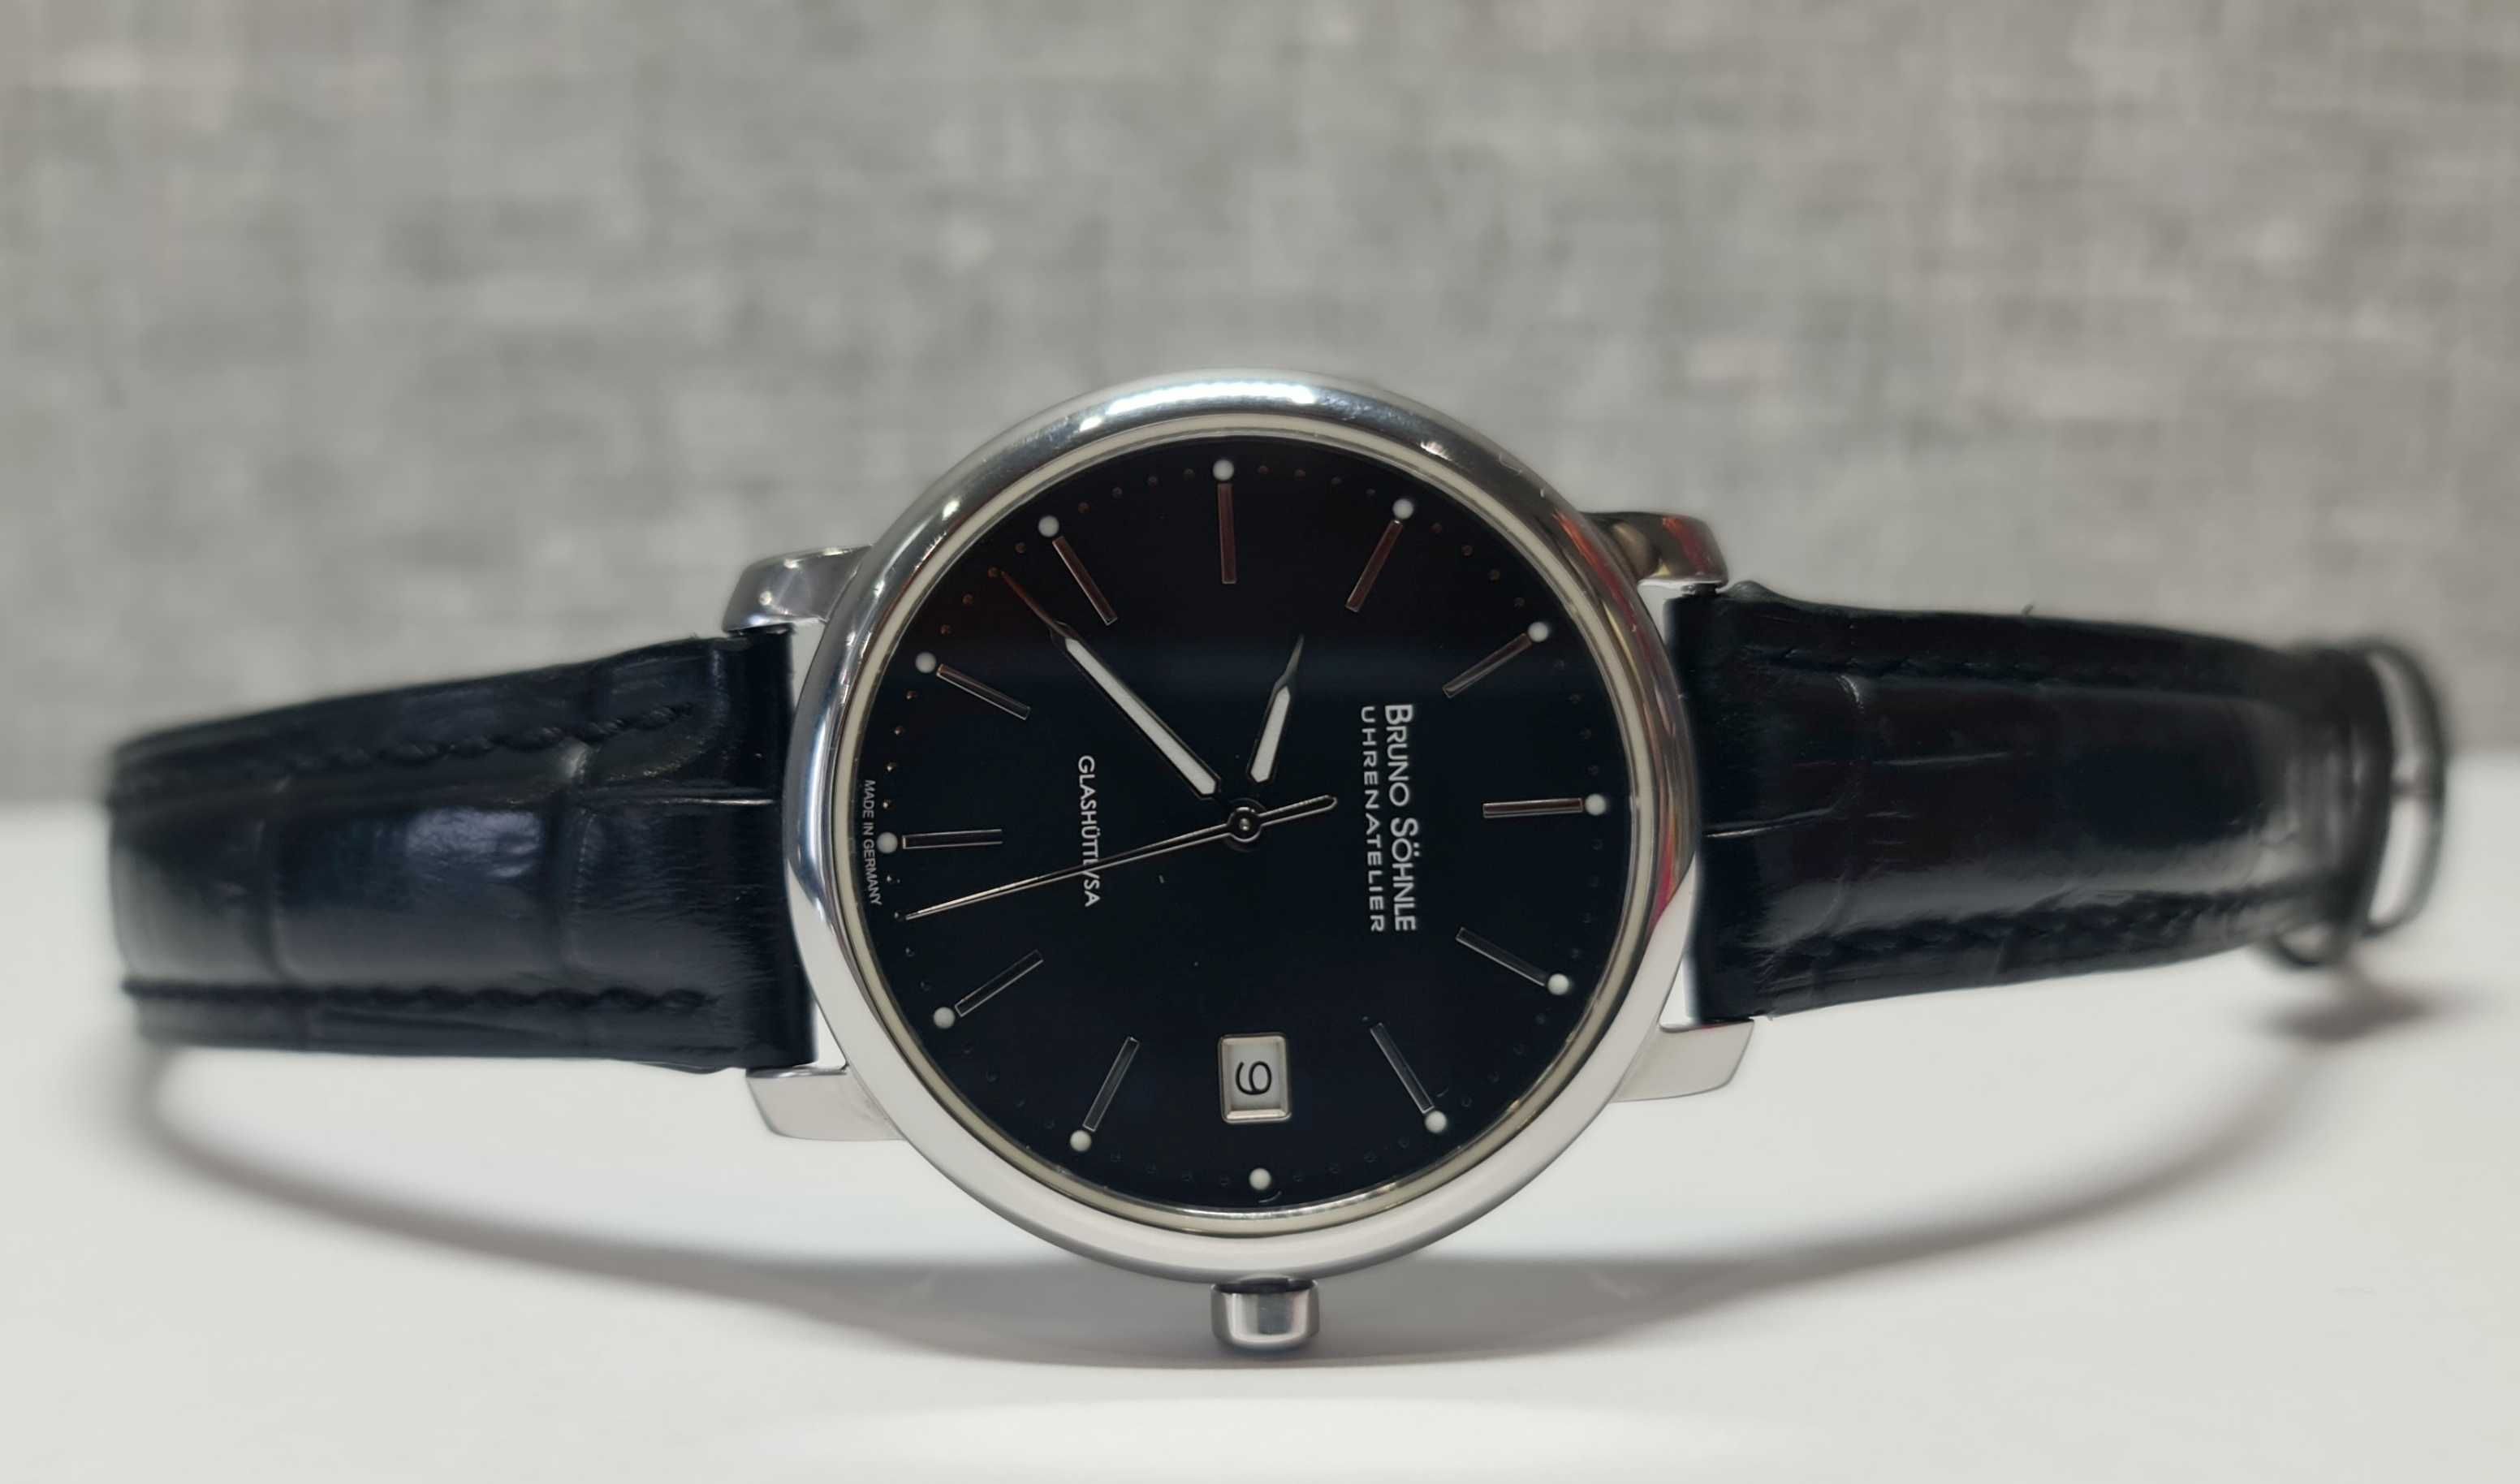 Чоловічий годинник часы Bruno Sohnle 17.13016.741 Sapphire 37 mm